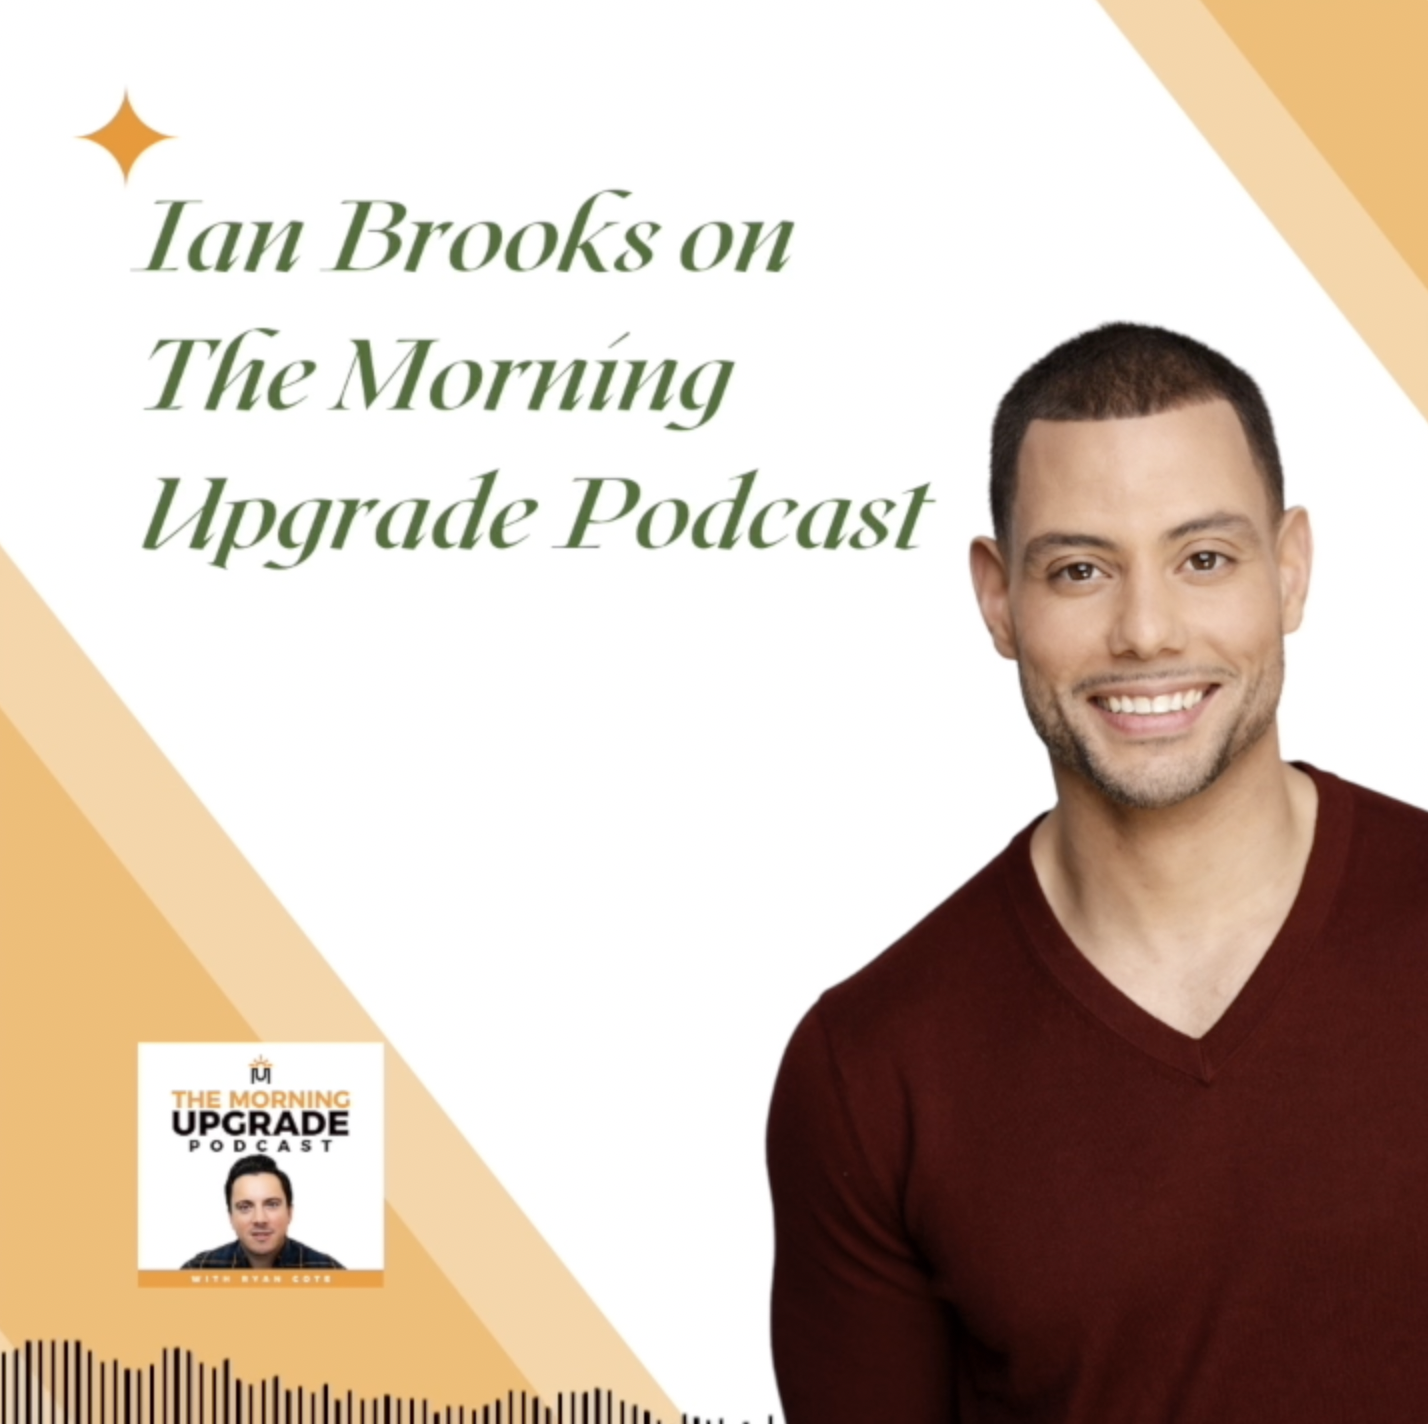 Ian Brooks on The Morning Upgrade Podcast